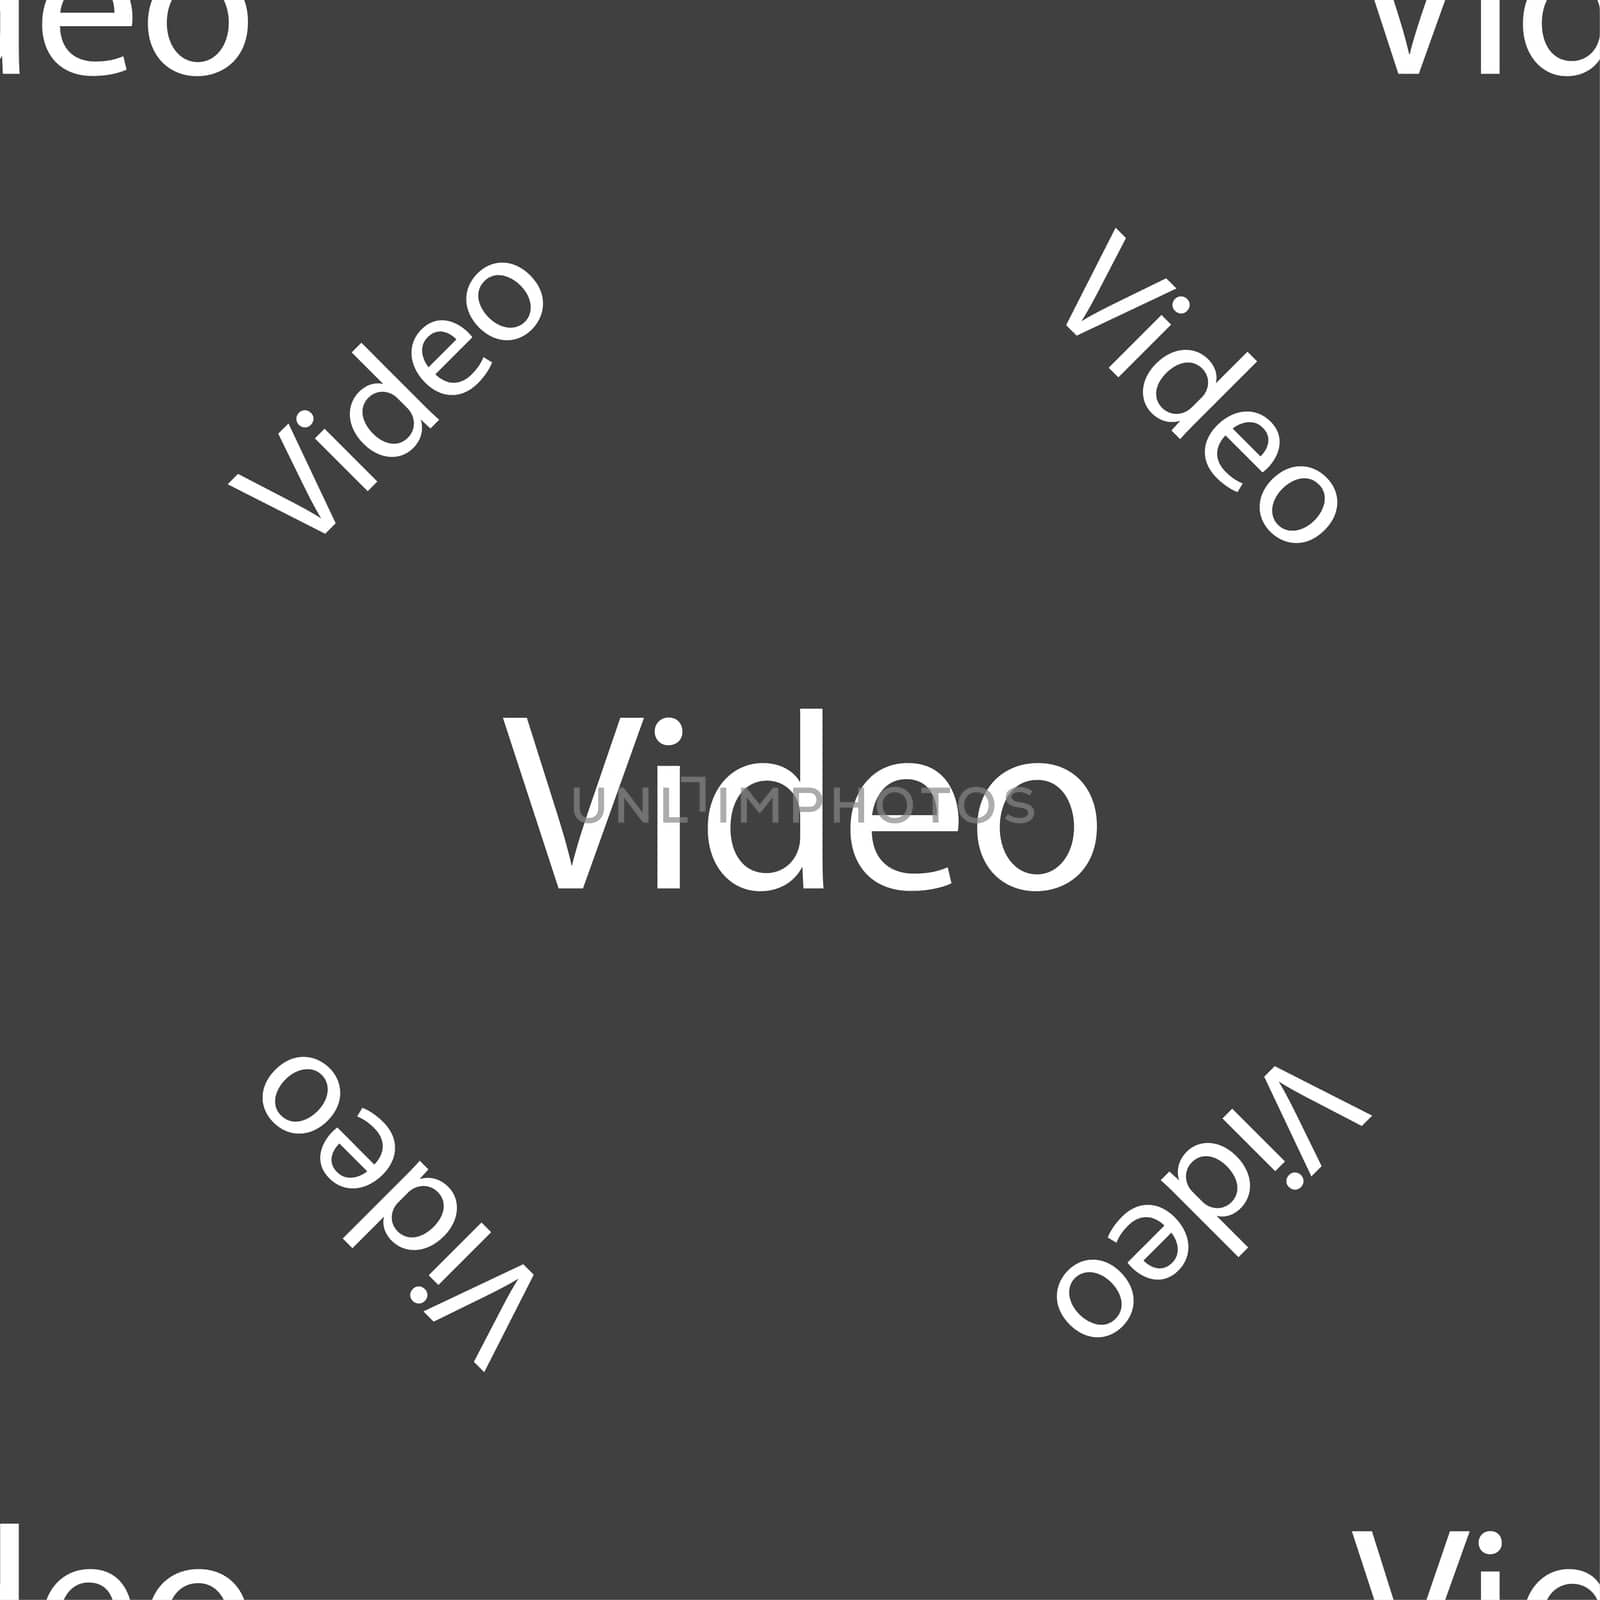 Play video sign icon. Player navigation symbol. Seamless pattern on a gray background.  by serhii_lohvyniuk